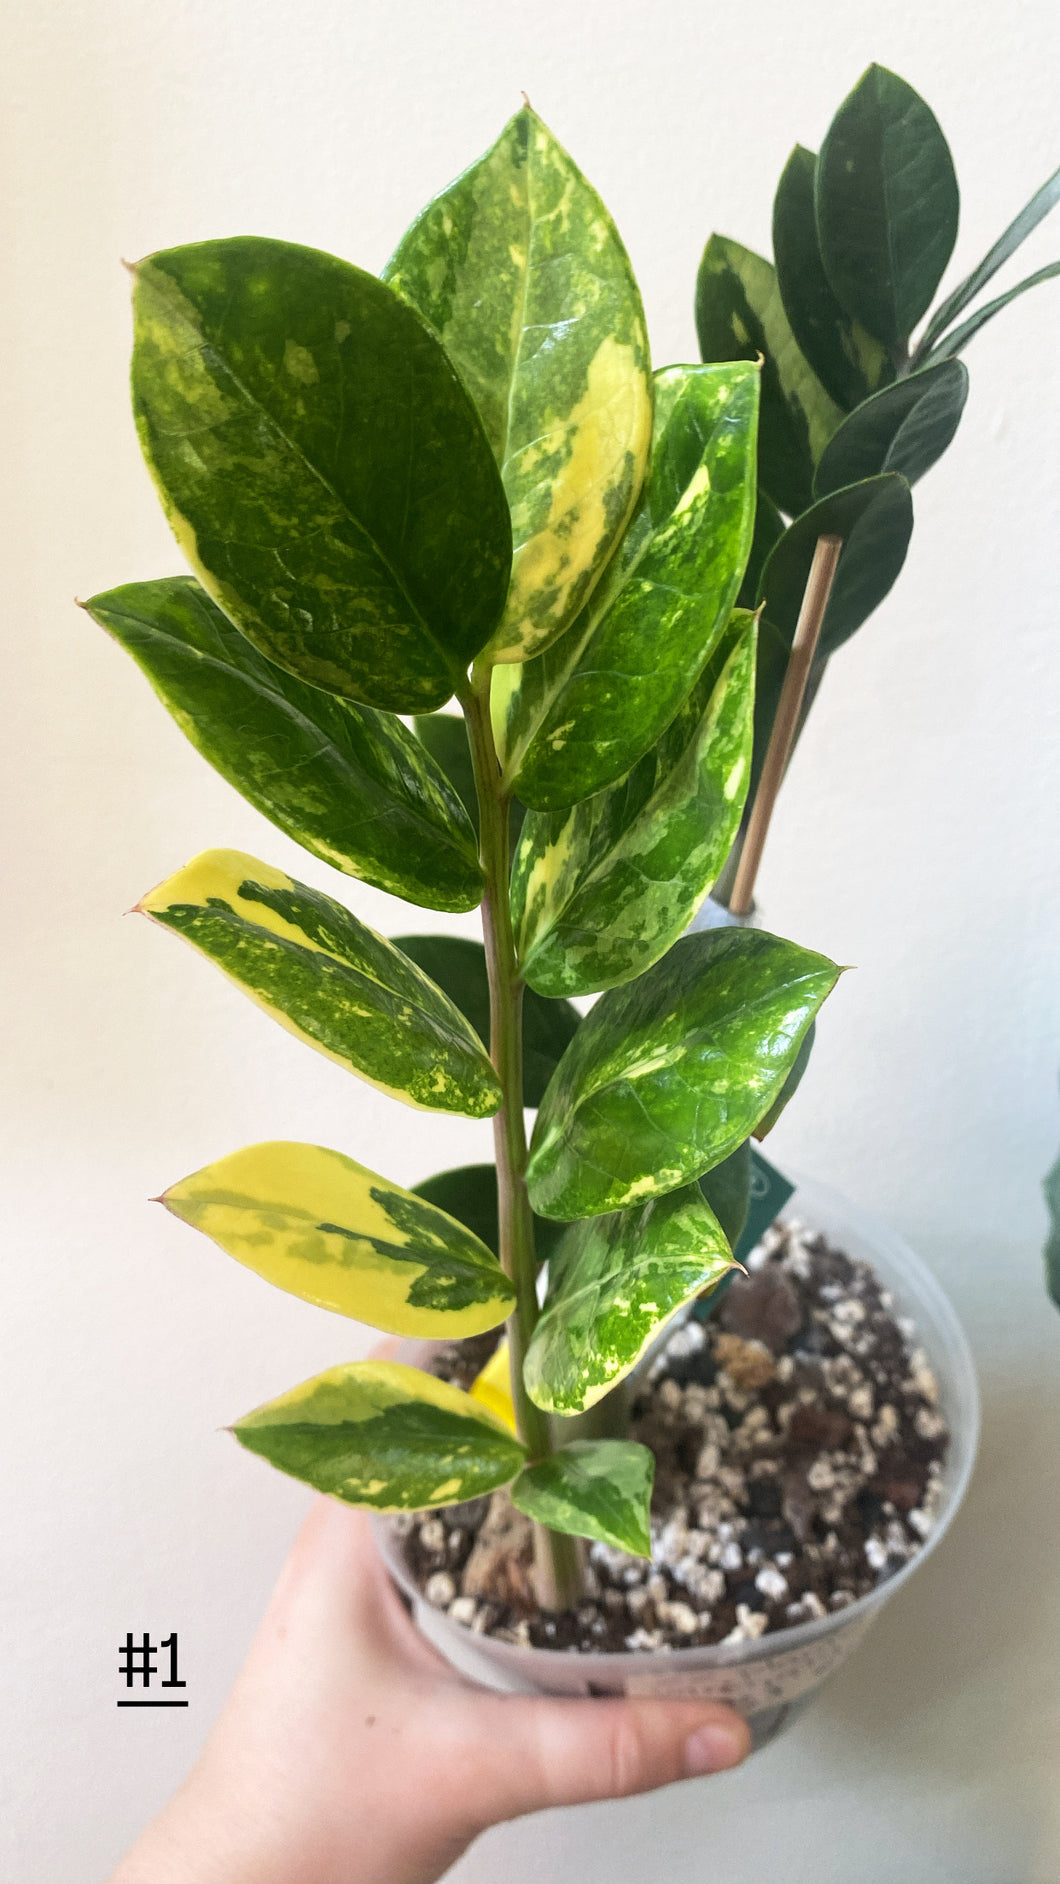 Zz plant variegata #1